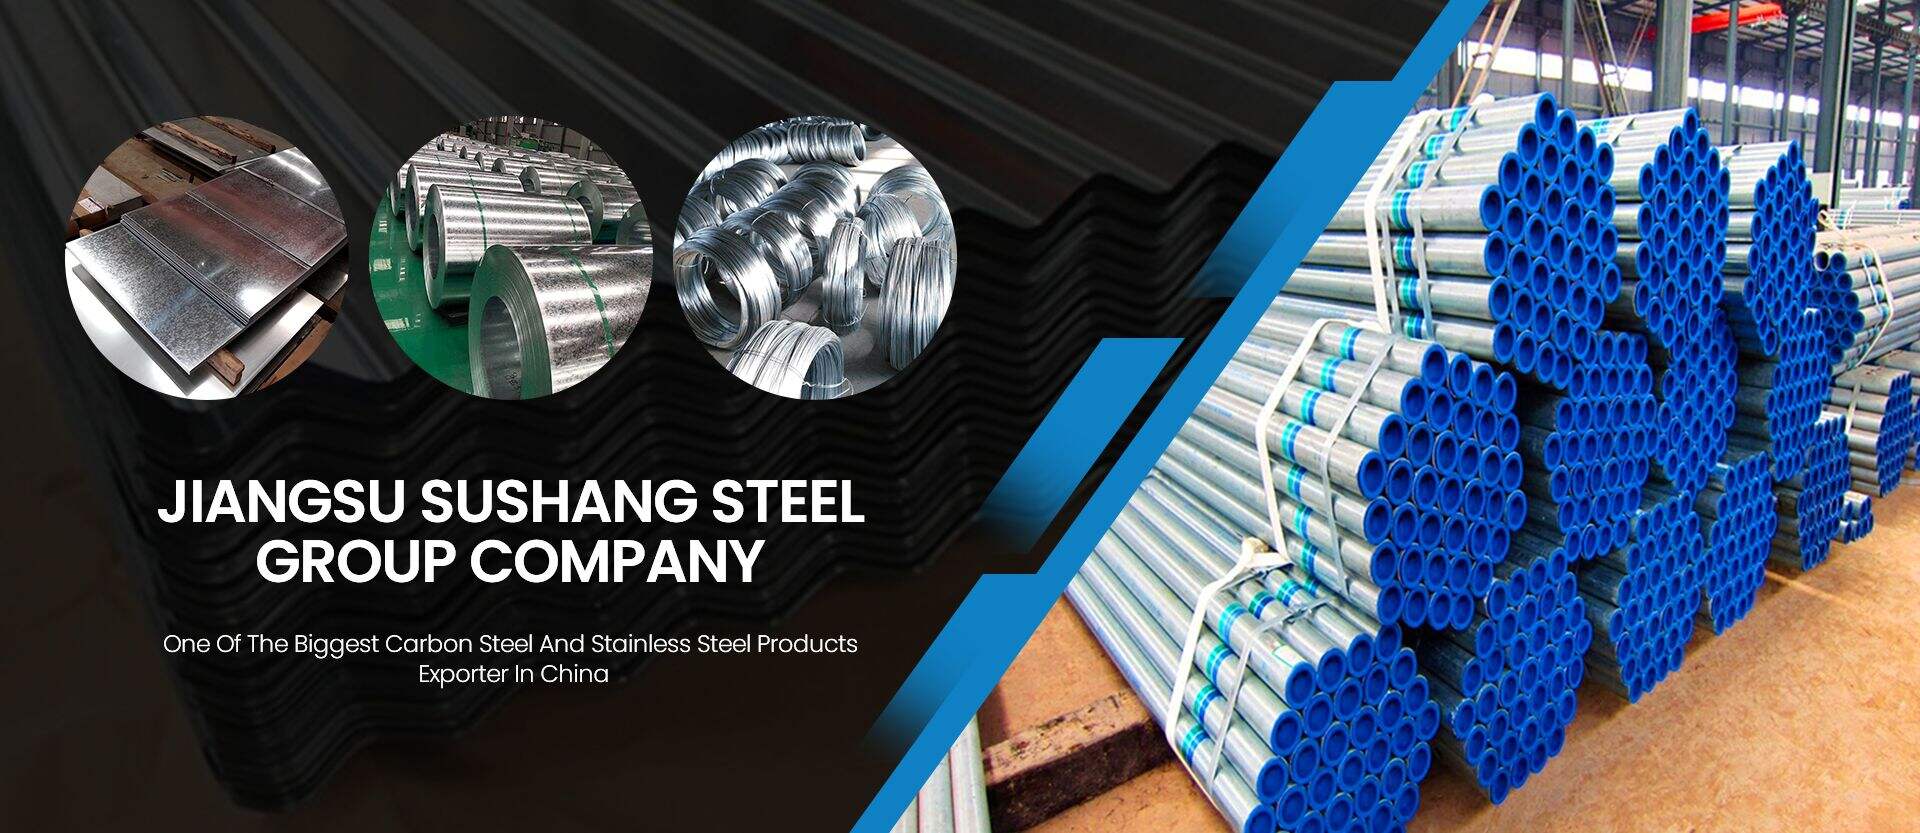 شرکت گروه فولاد جیانگ سو سوشانگ